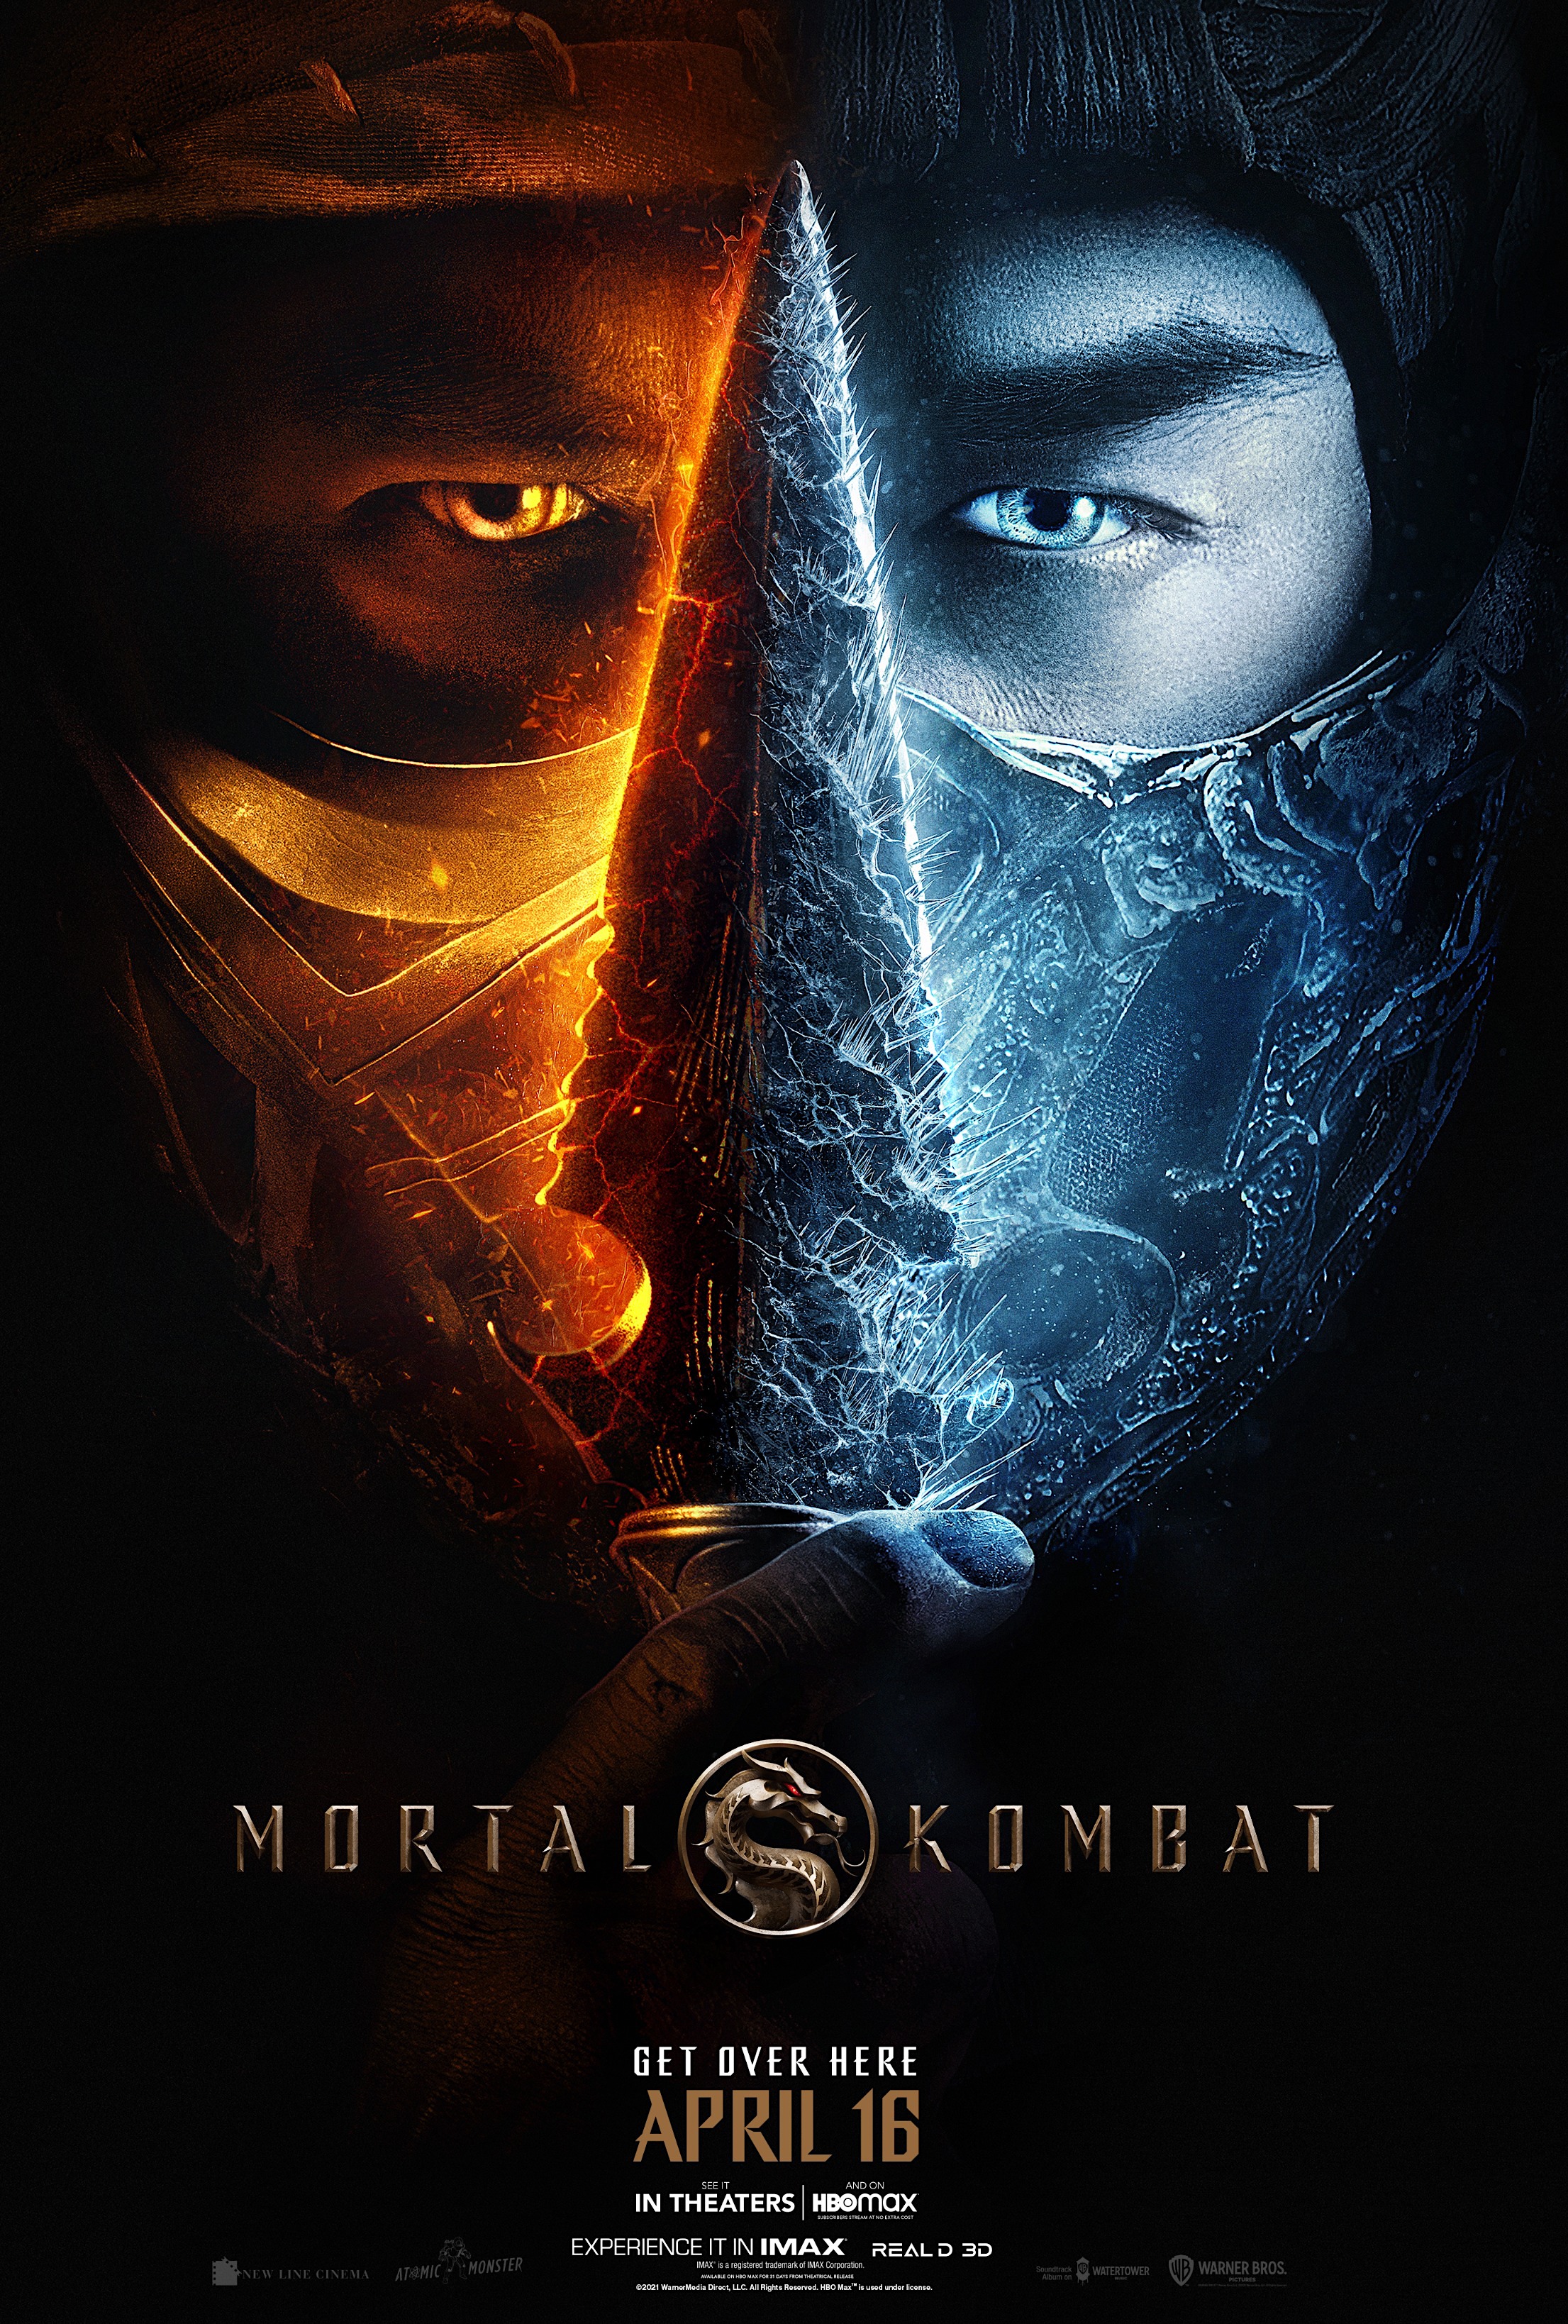 Wallpaper Liu Kang Mortal Kombat X Liu Kang images for desktop section  игры  download